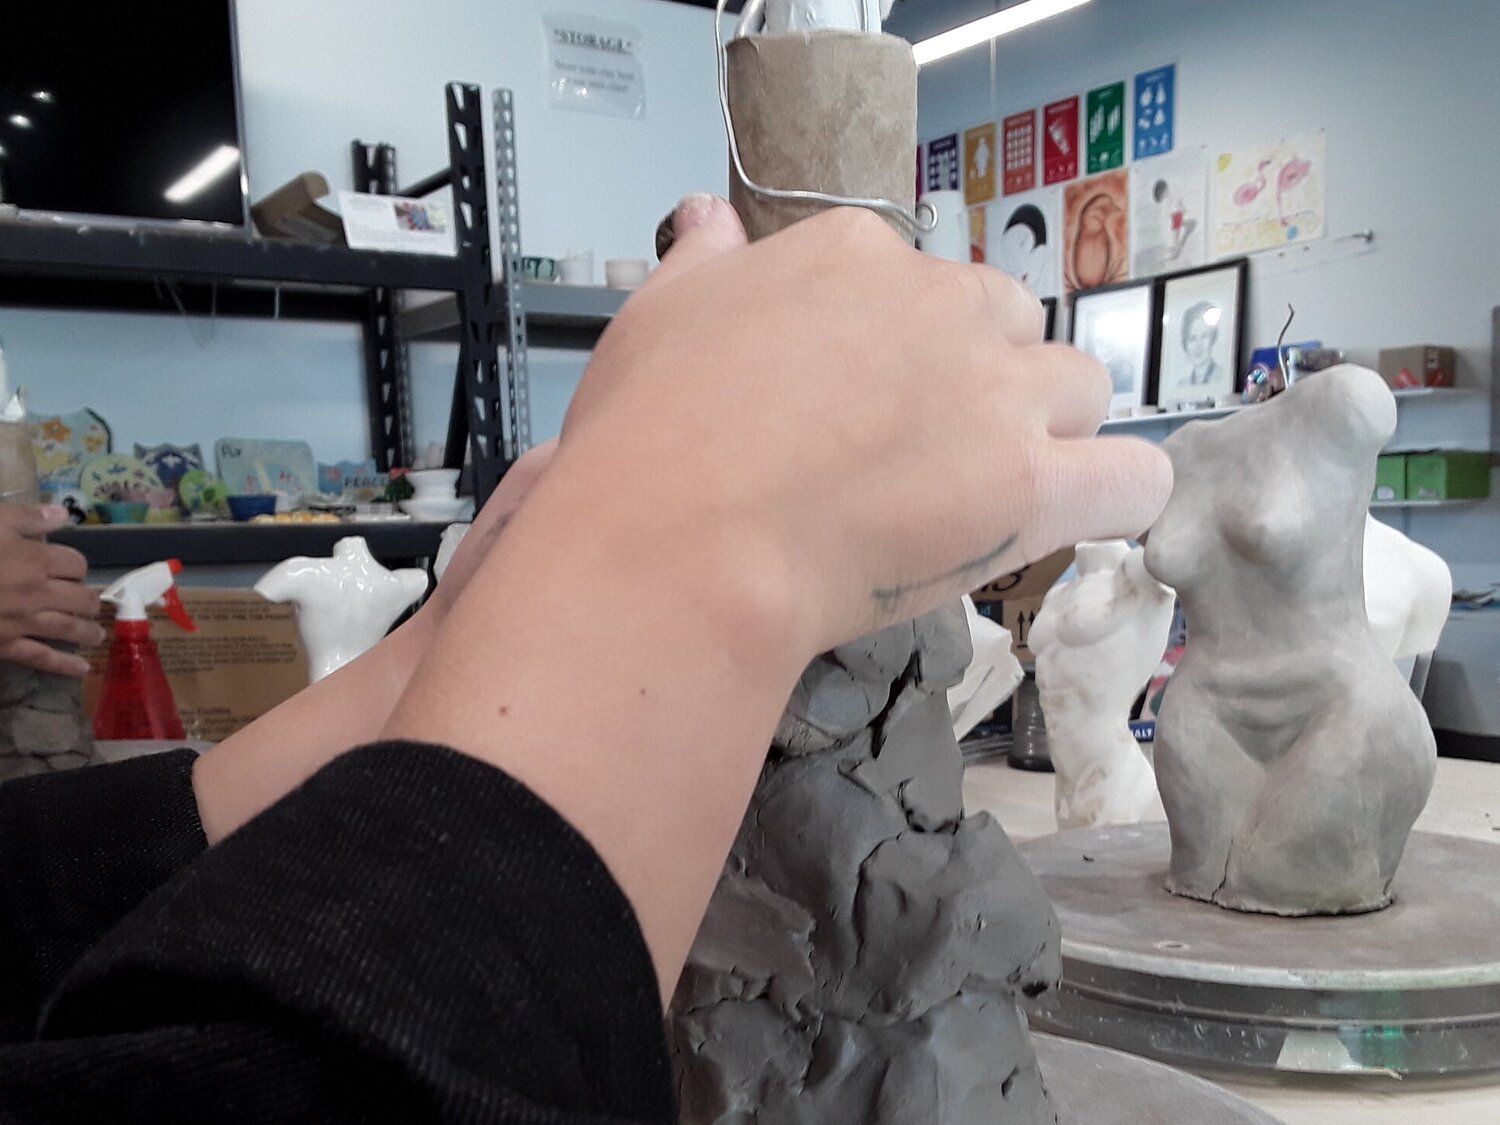 The Art of Figure Sculpting of Hidden Beauty - FEELartistic Studio